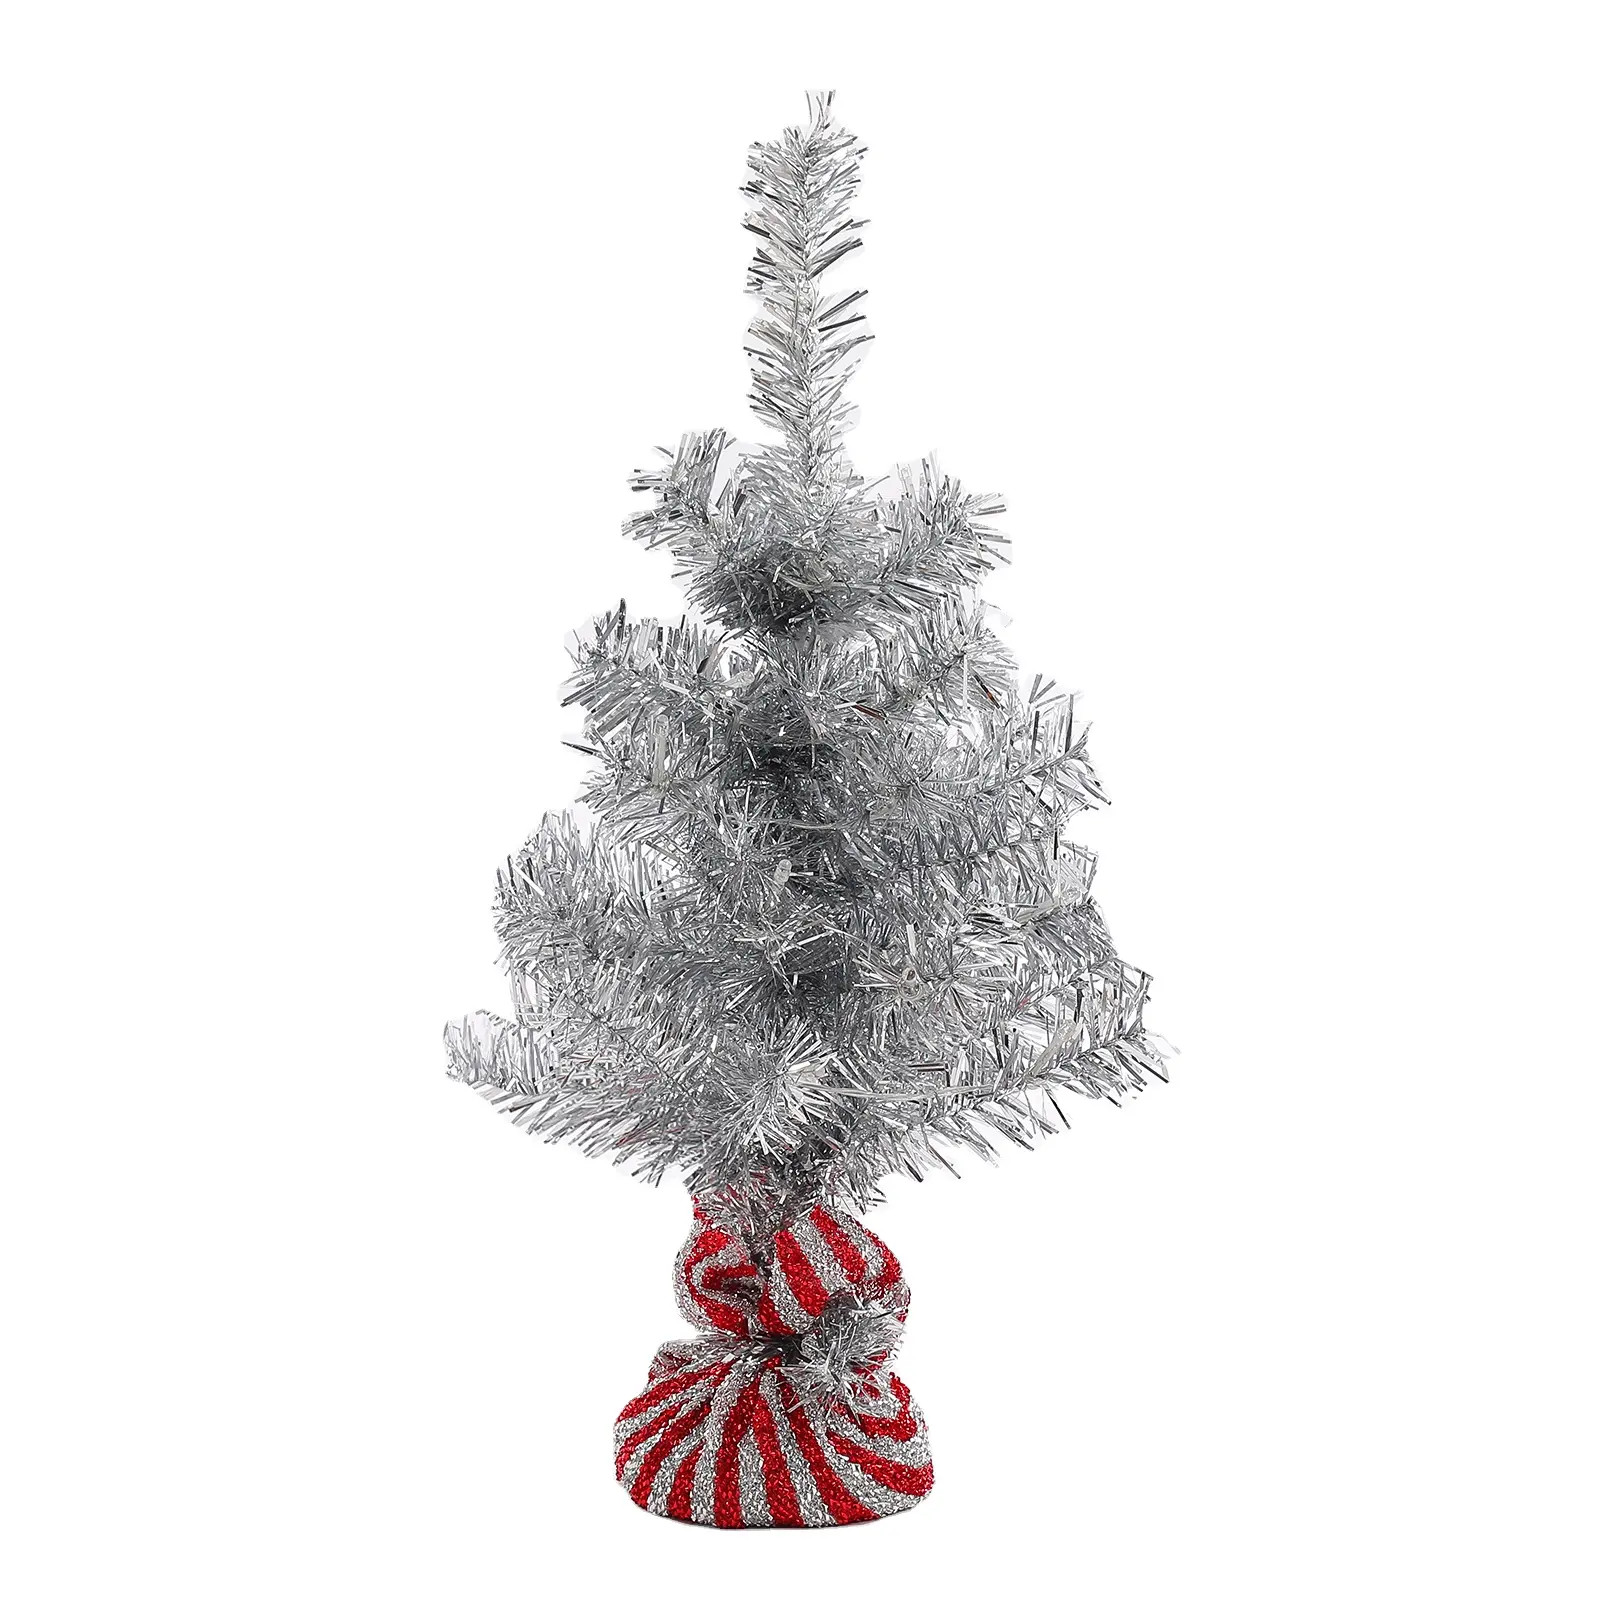 40T warm colorful lights 45cm Artificial Christmas Decorative tree indoor silver xmas tree